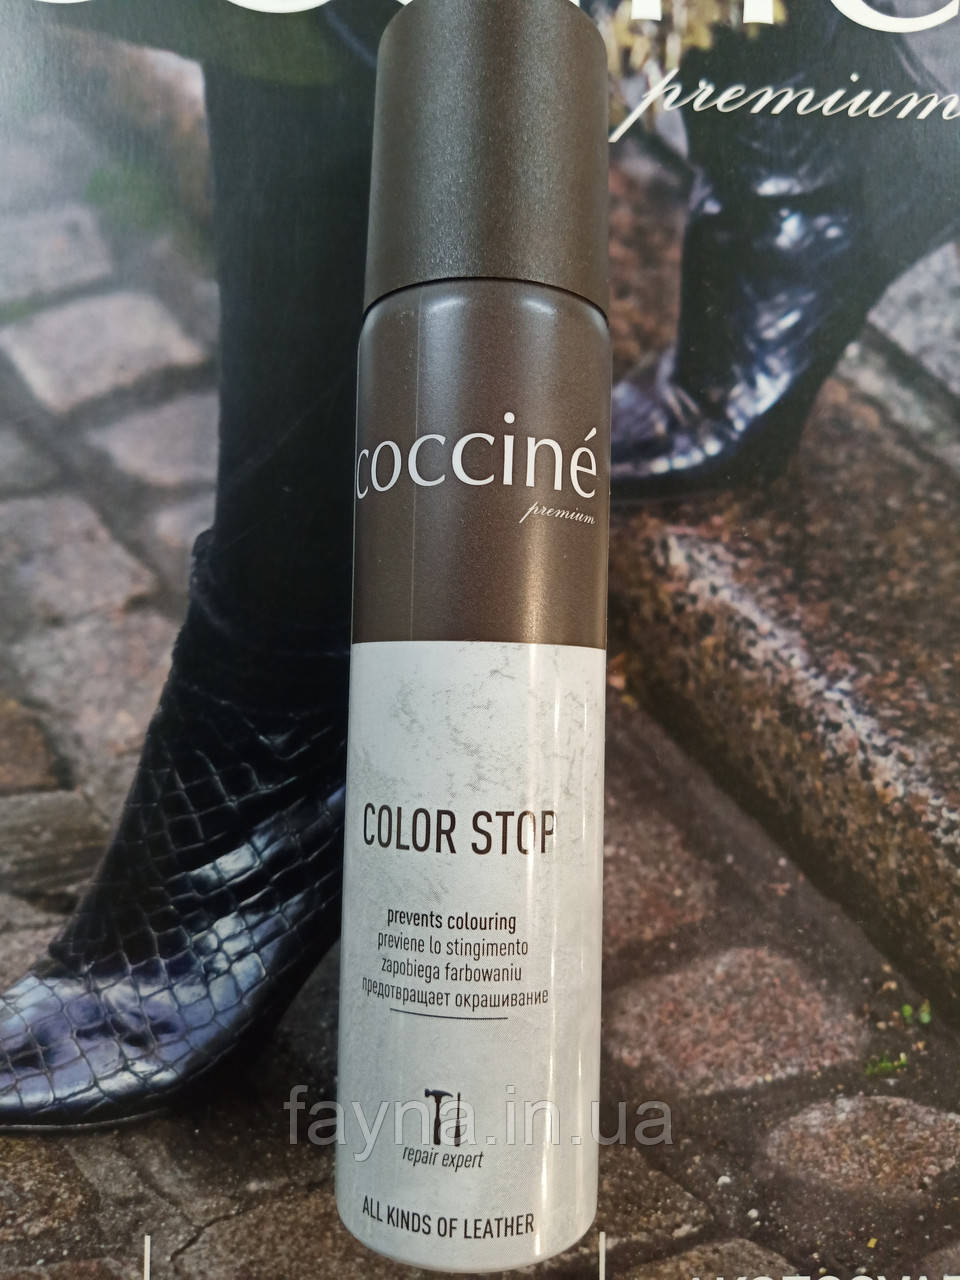 Захист стопи від фарбування Coccine Color Stop